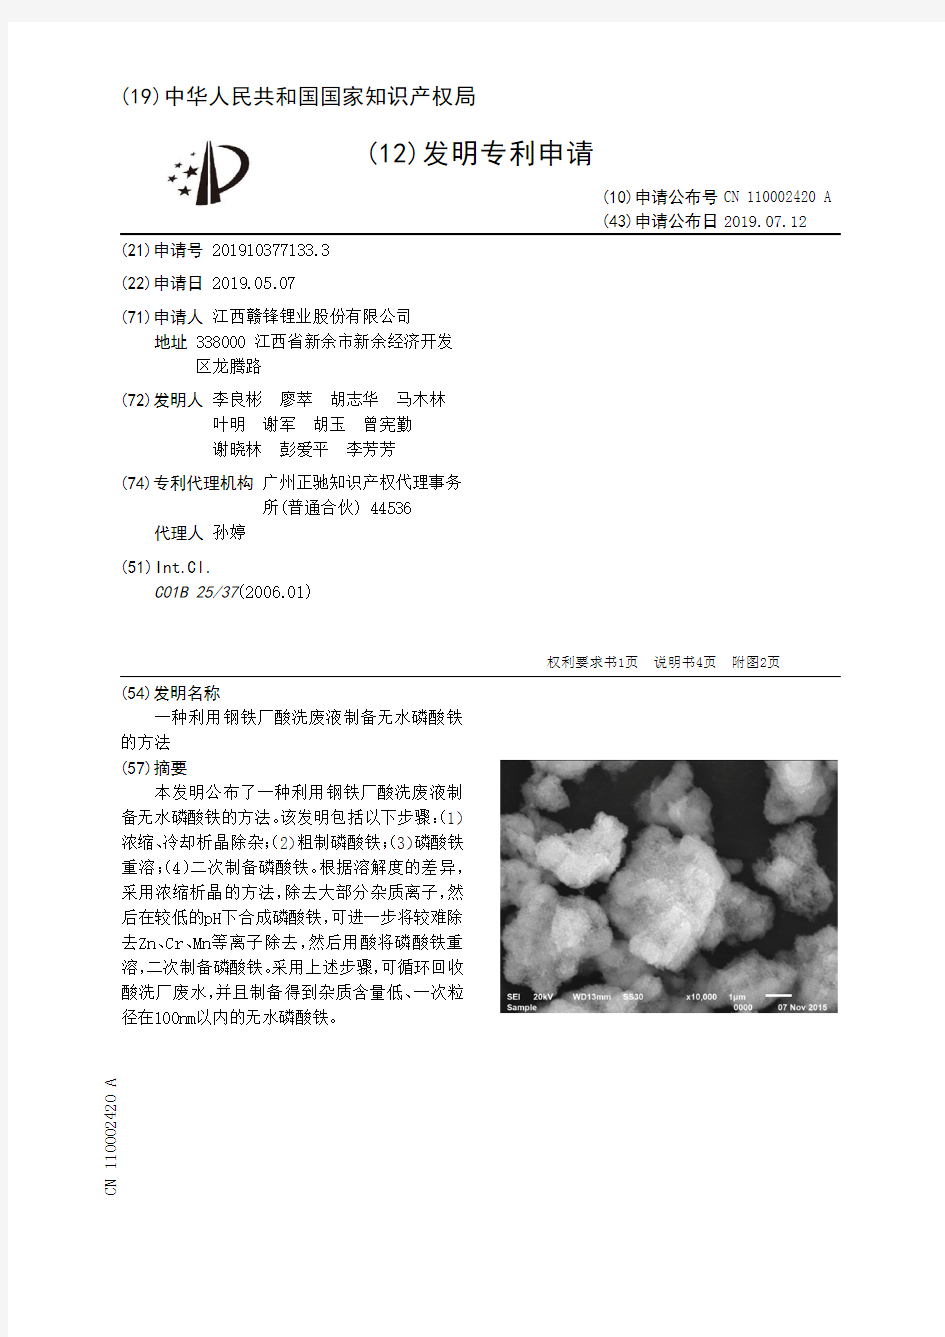 【CN110002420A】一种利用钢铁厂酸洗废液制备无水磷酸铁的方法【专利】